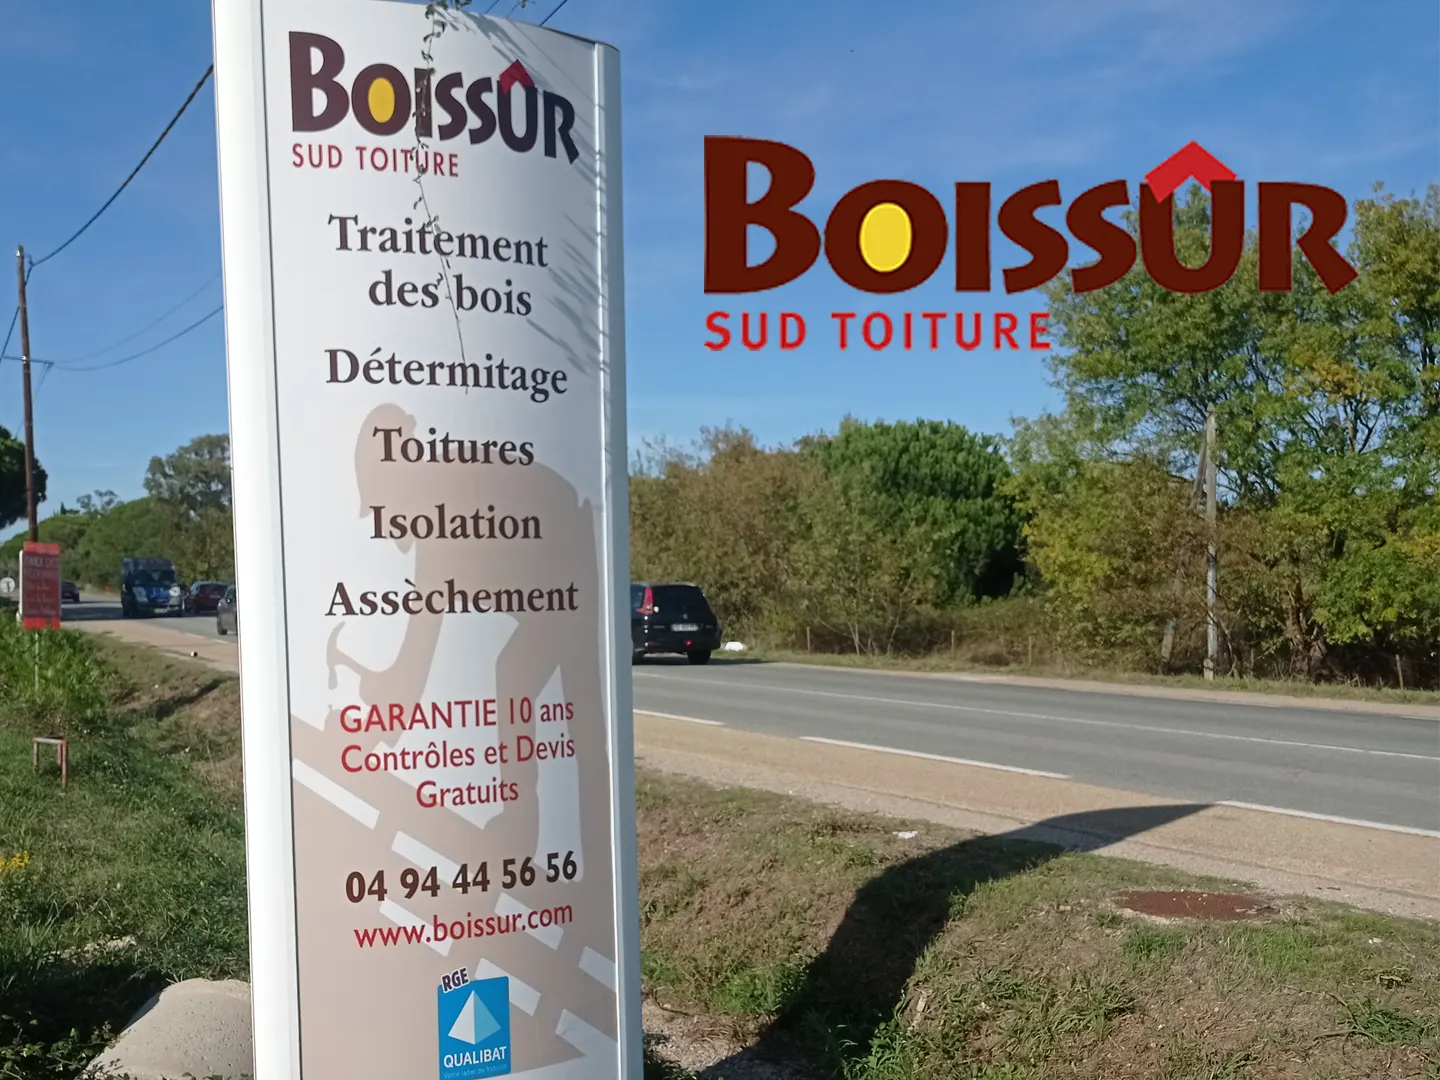 Boissur Sud Toiture